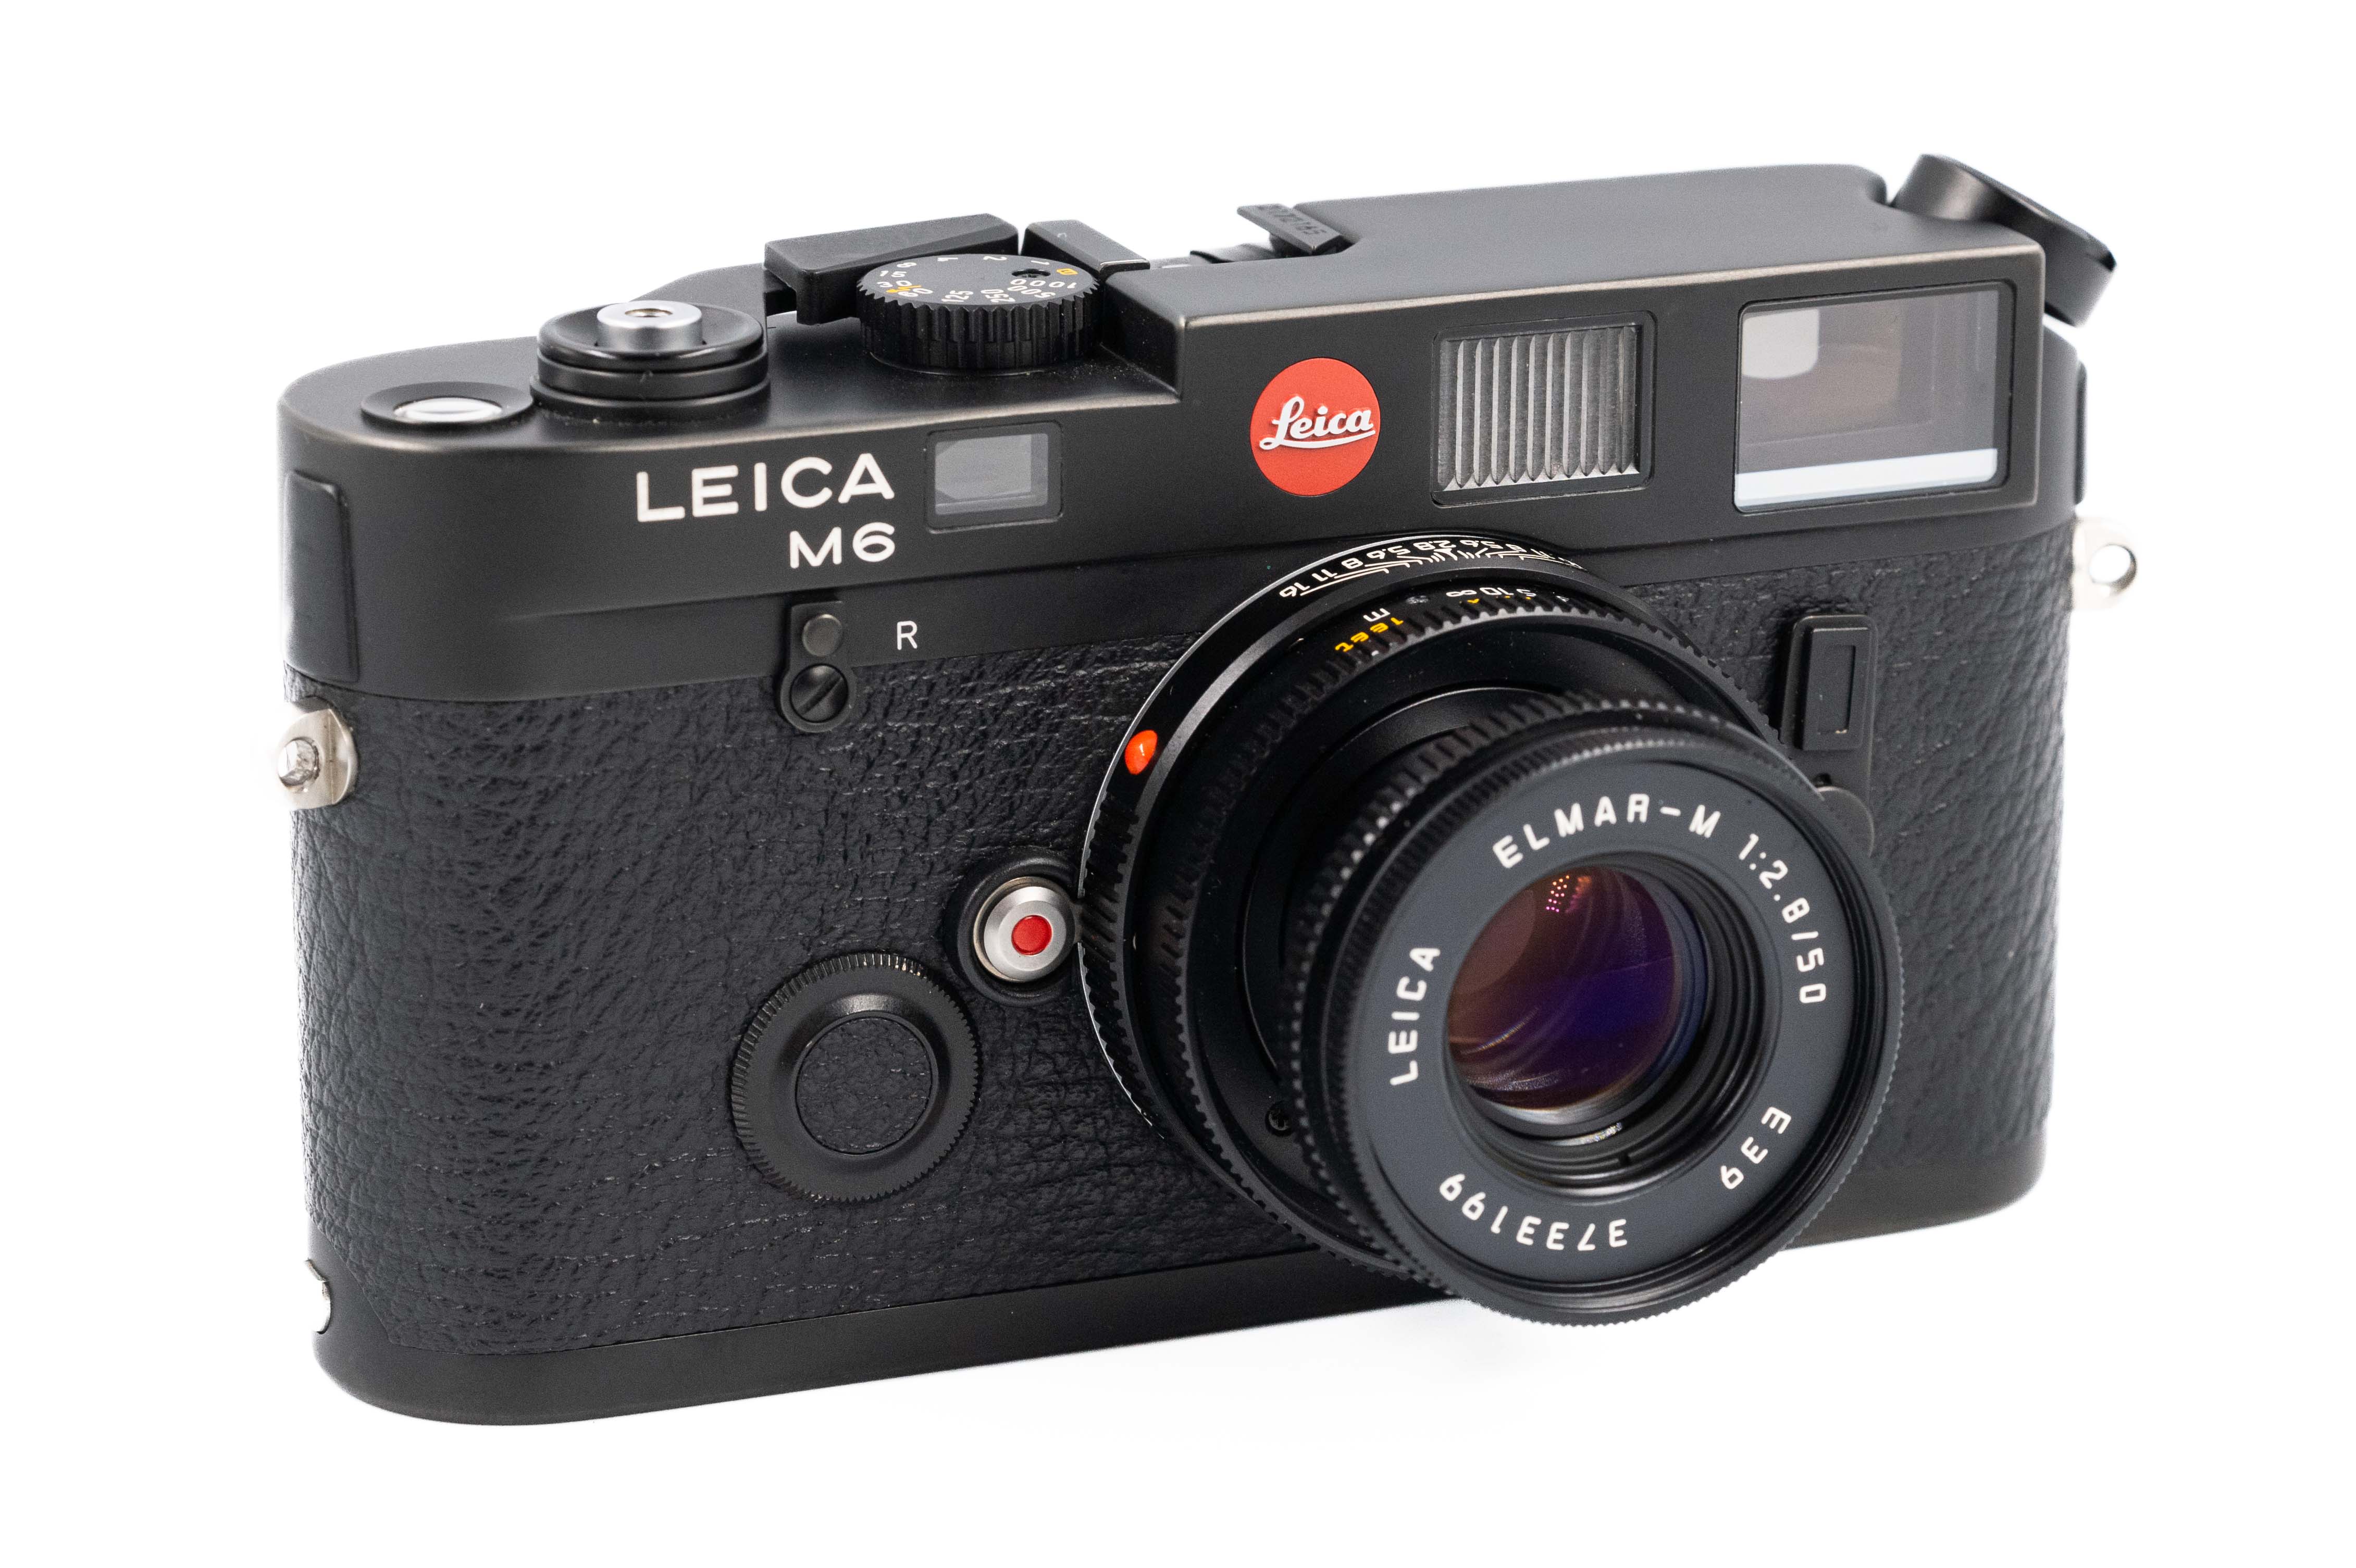 Leica M6 0.72x Black Chrome outfit with Elmar-M 50mm f/2.8